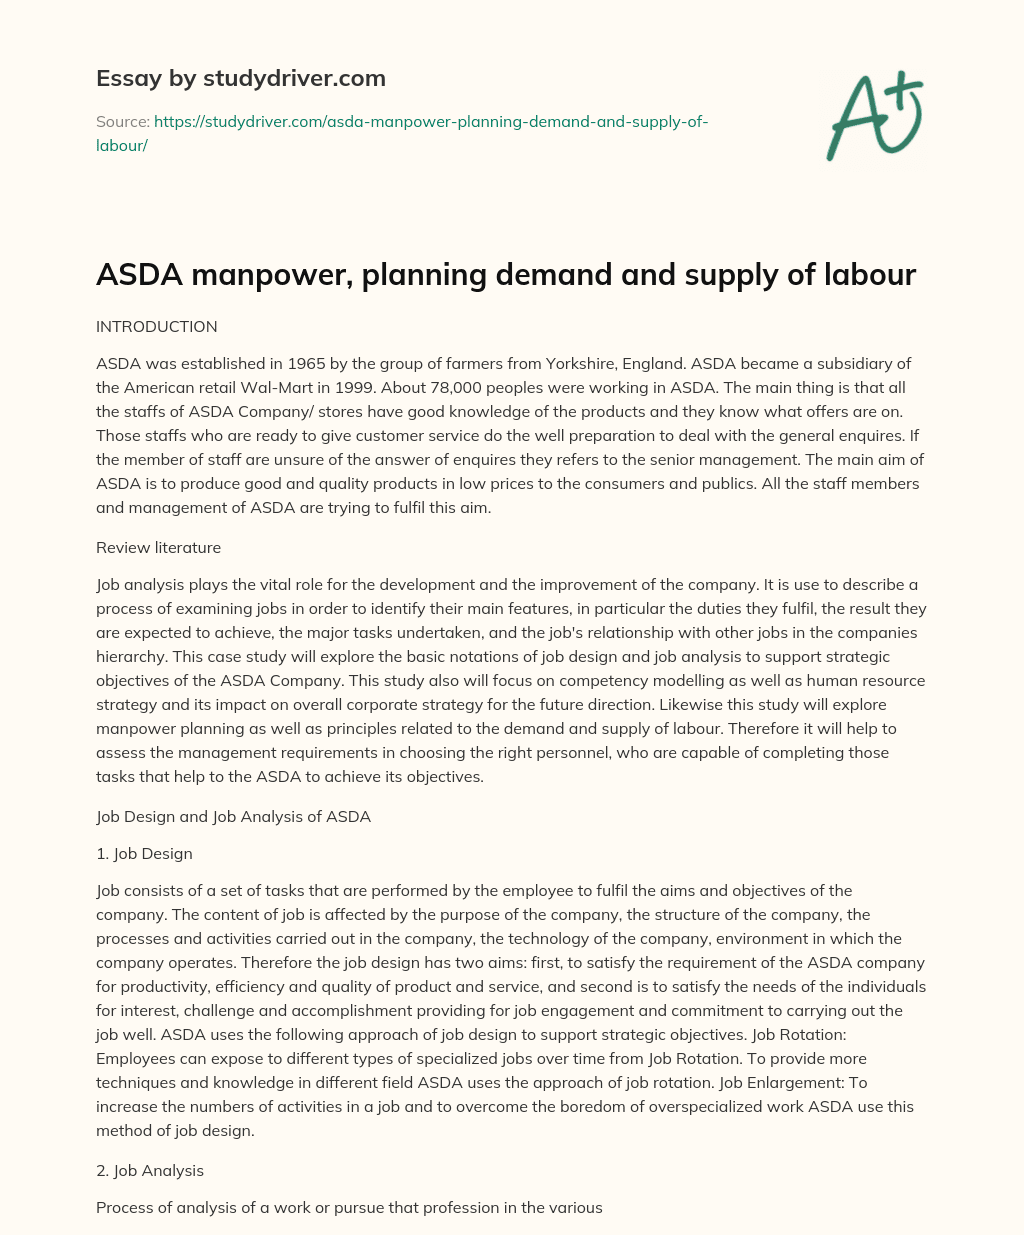 ASDA Manpower, Planning Demand and Supply of Labour essay